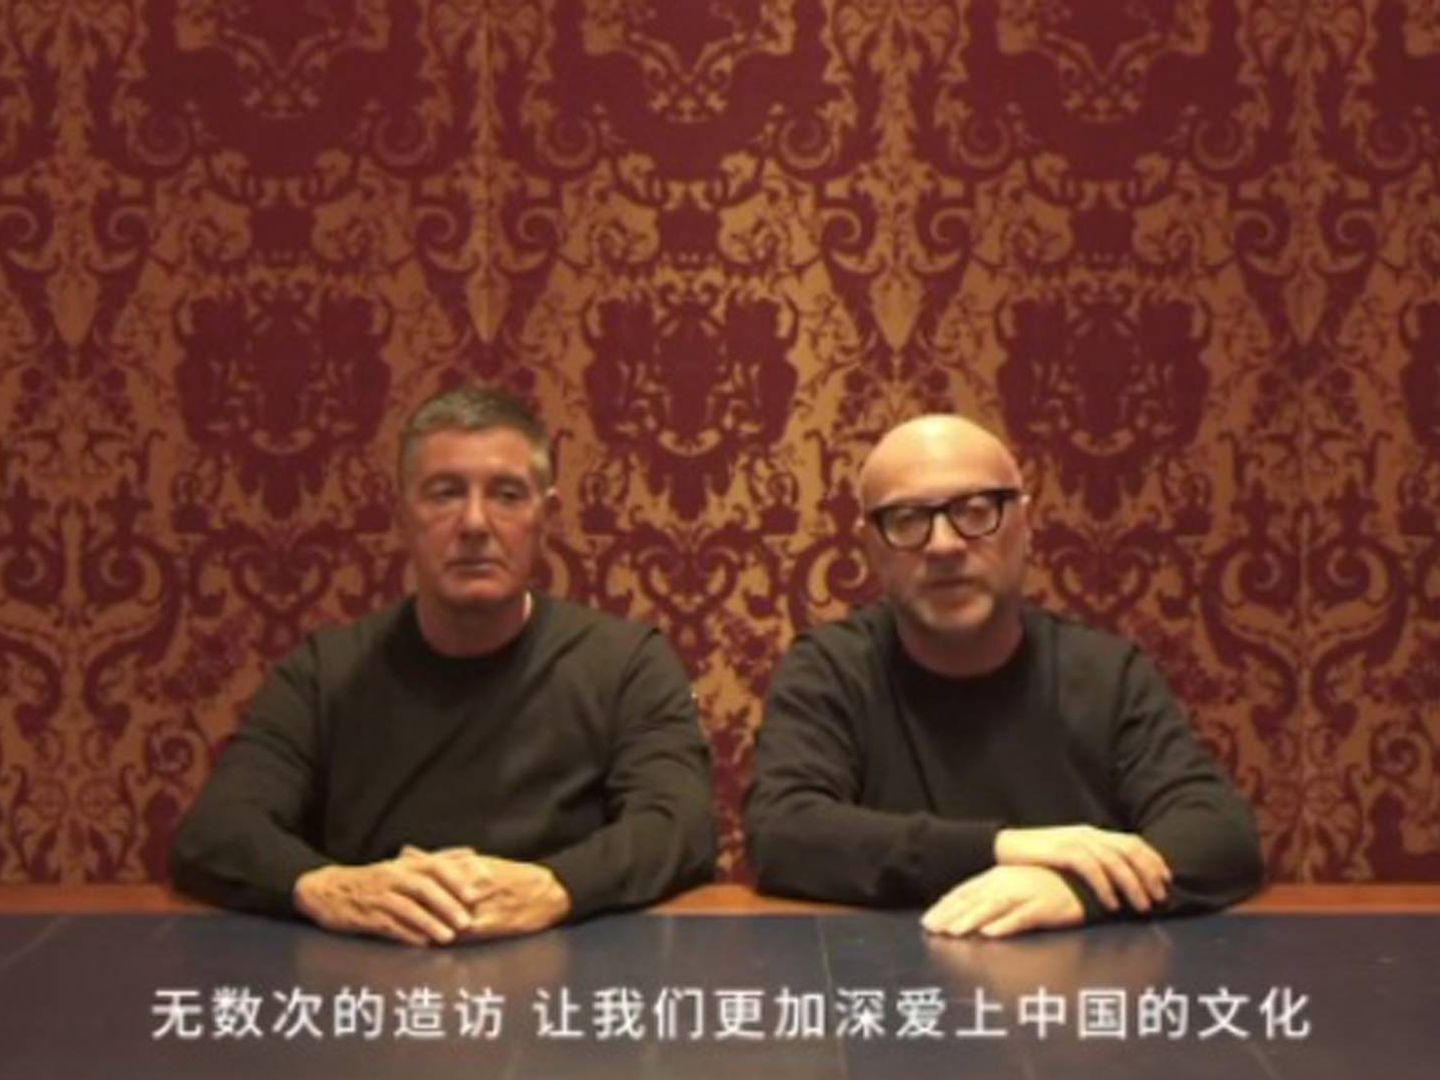 Fotograma de la disculpa de Dolce & Gabbana en Weibo. (Cordon Press)